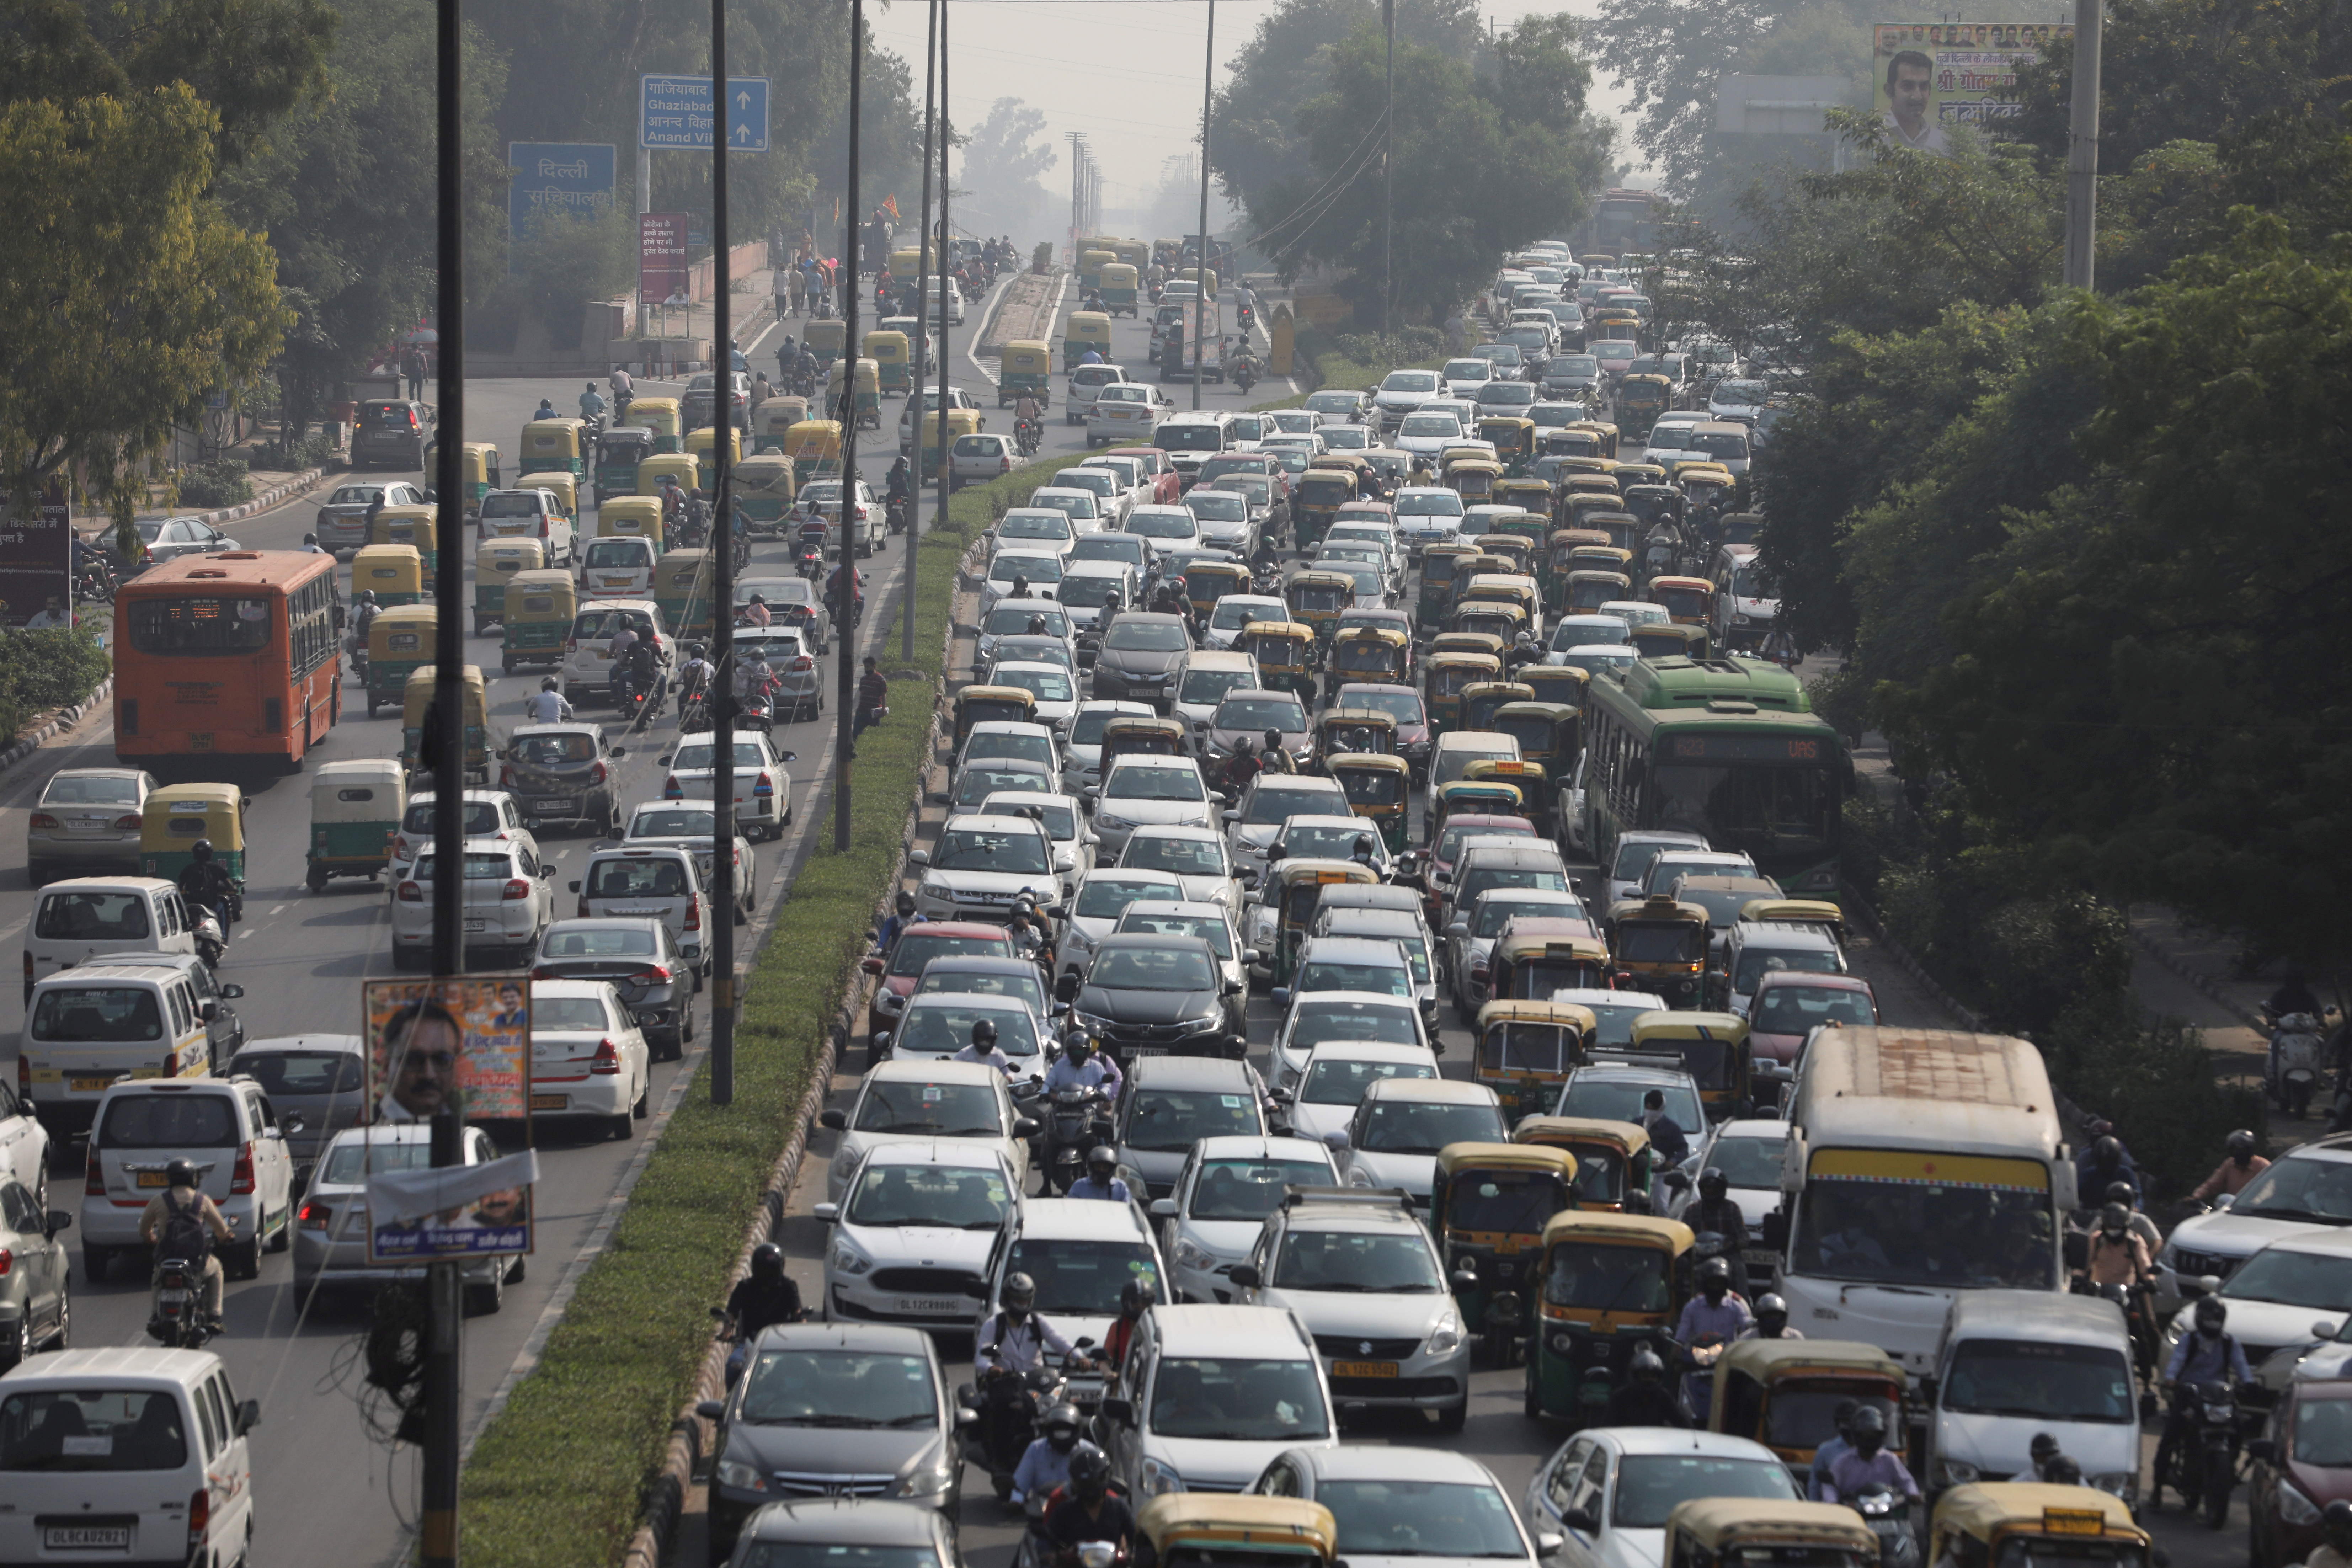 Vehicles queue at a traffic light on a hazy morning in New Delhi, India, October 16, 2020. REUTERS/Anushree Fadnavis